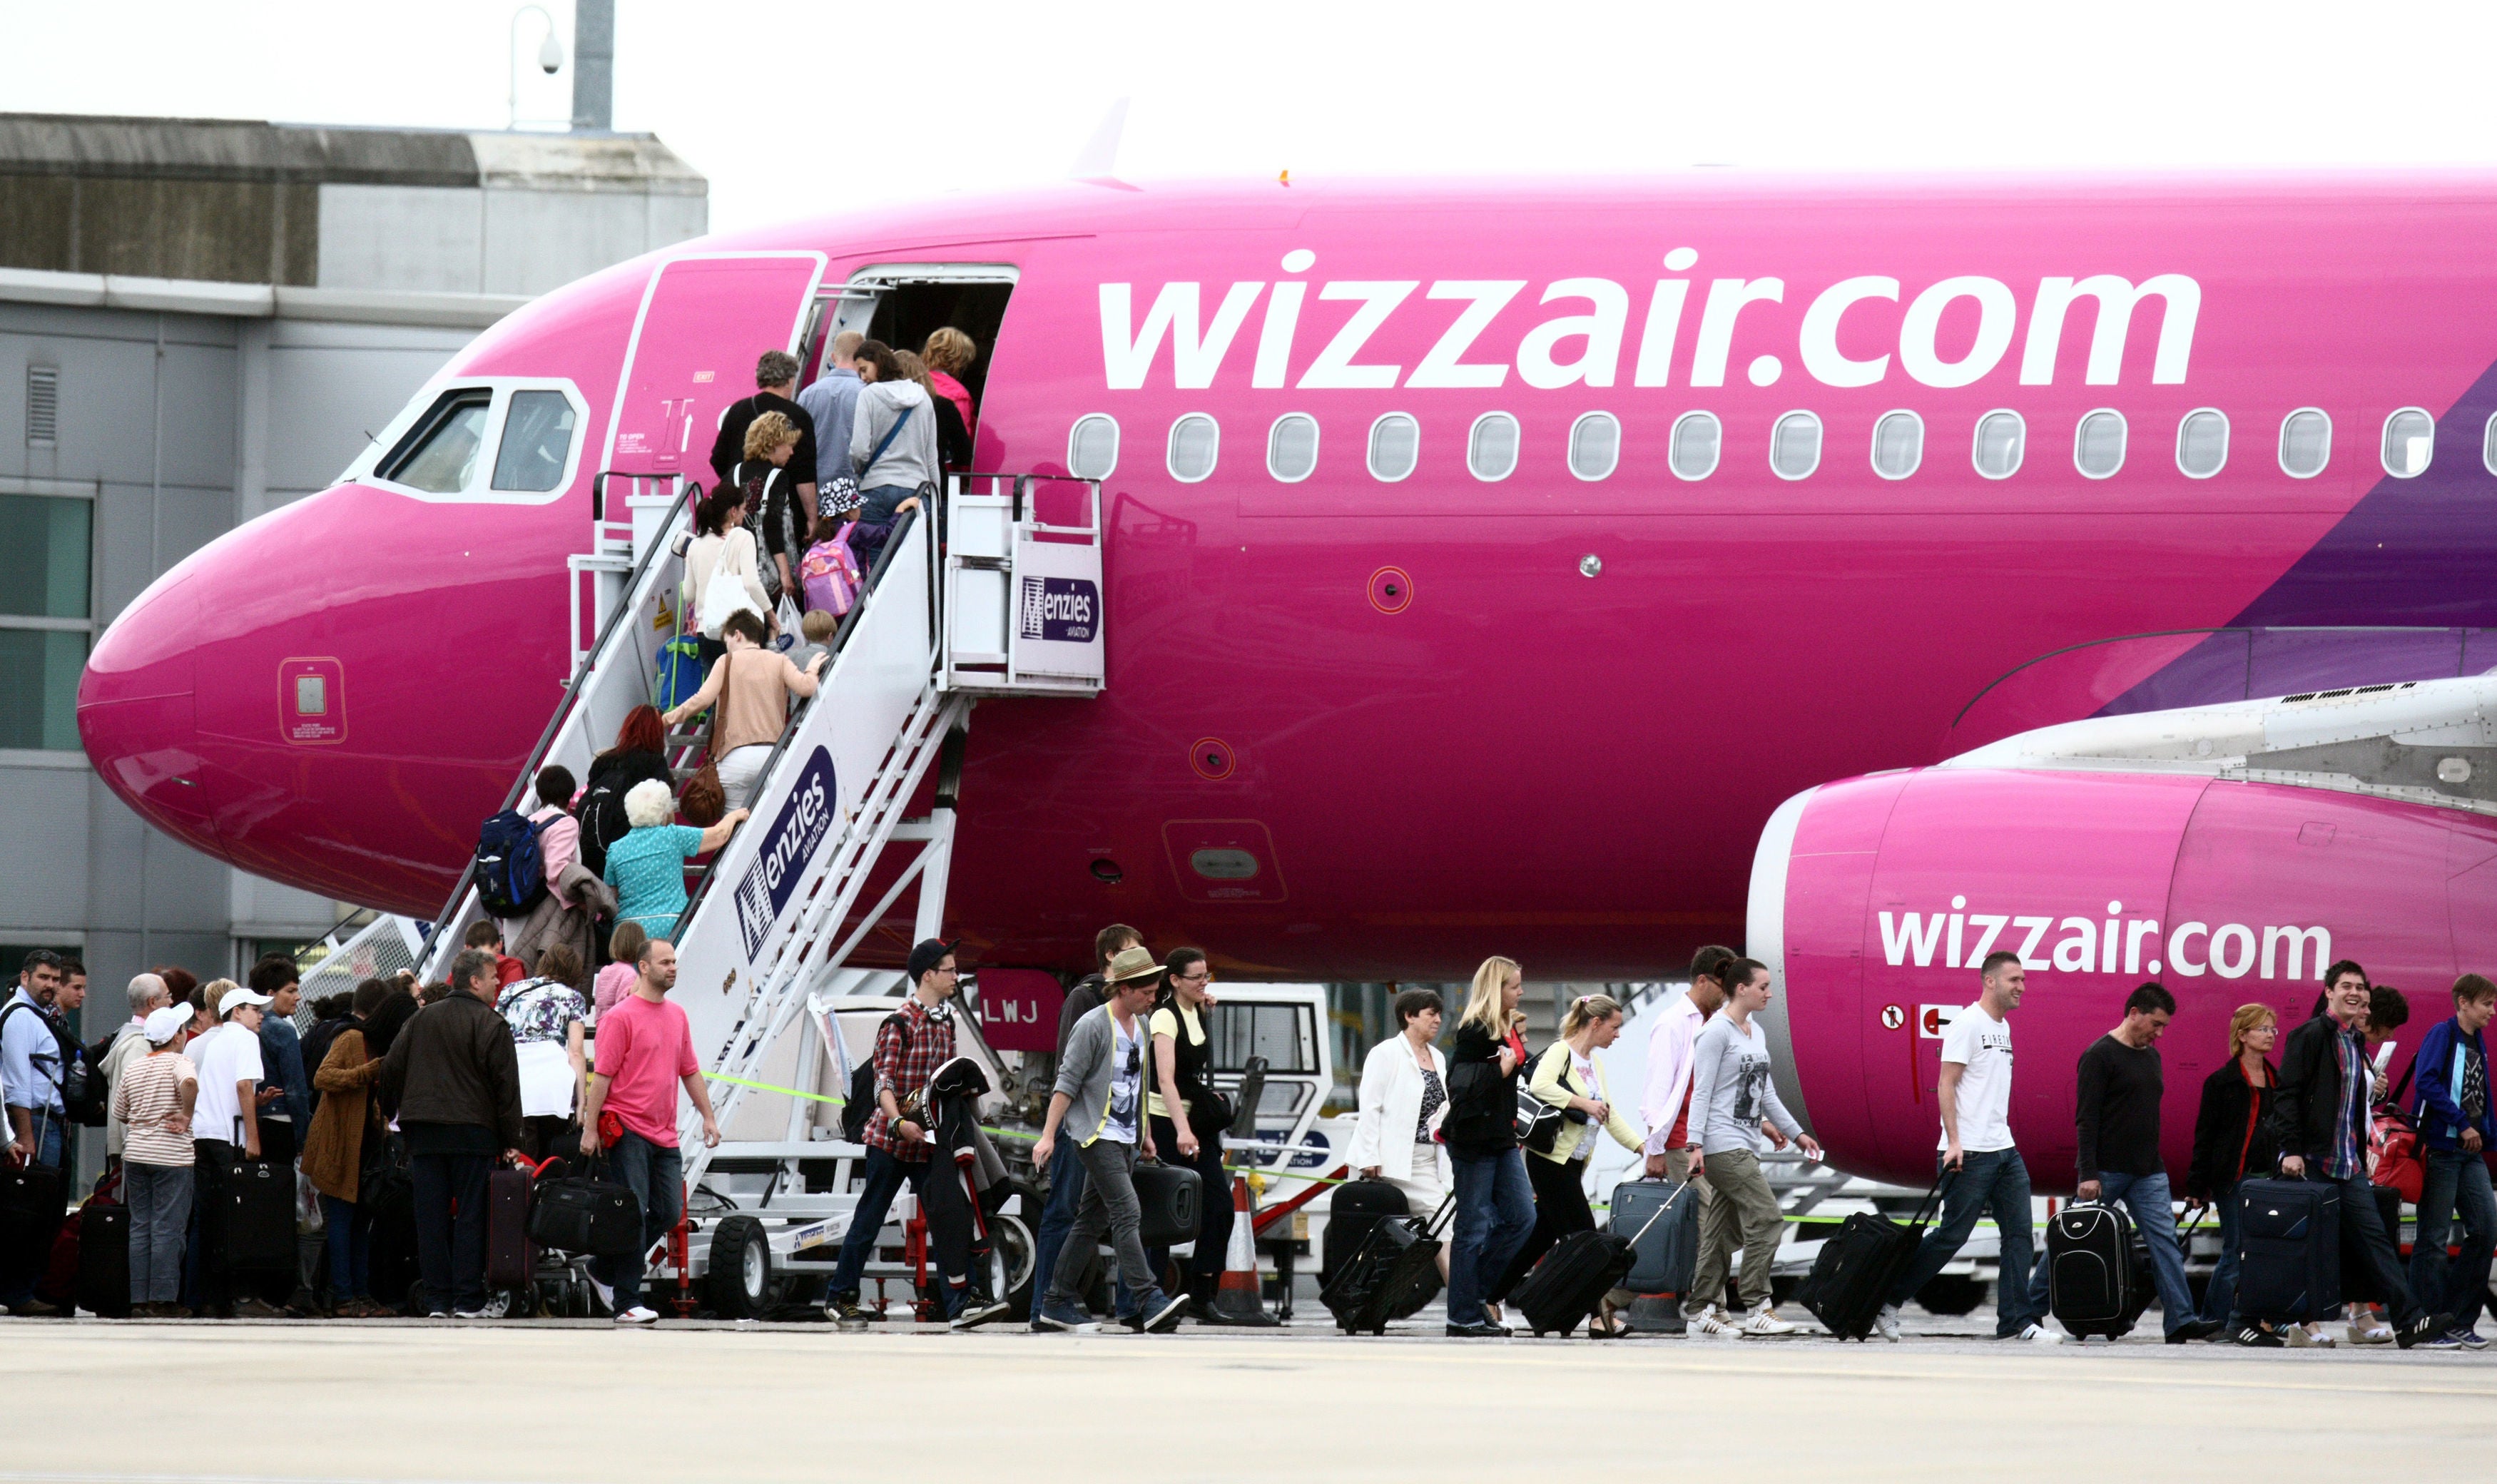 Passengers board a Wizz Air aircraft at London Luton Airport, where it serves 75 destinations